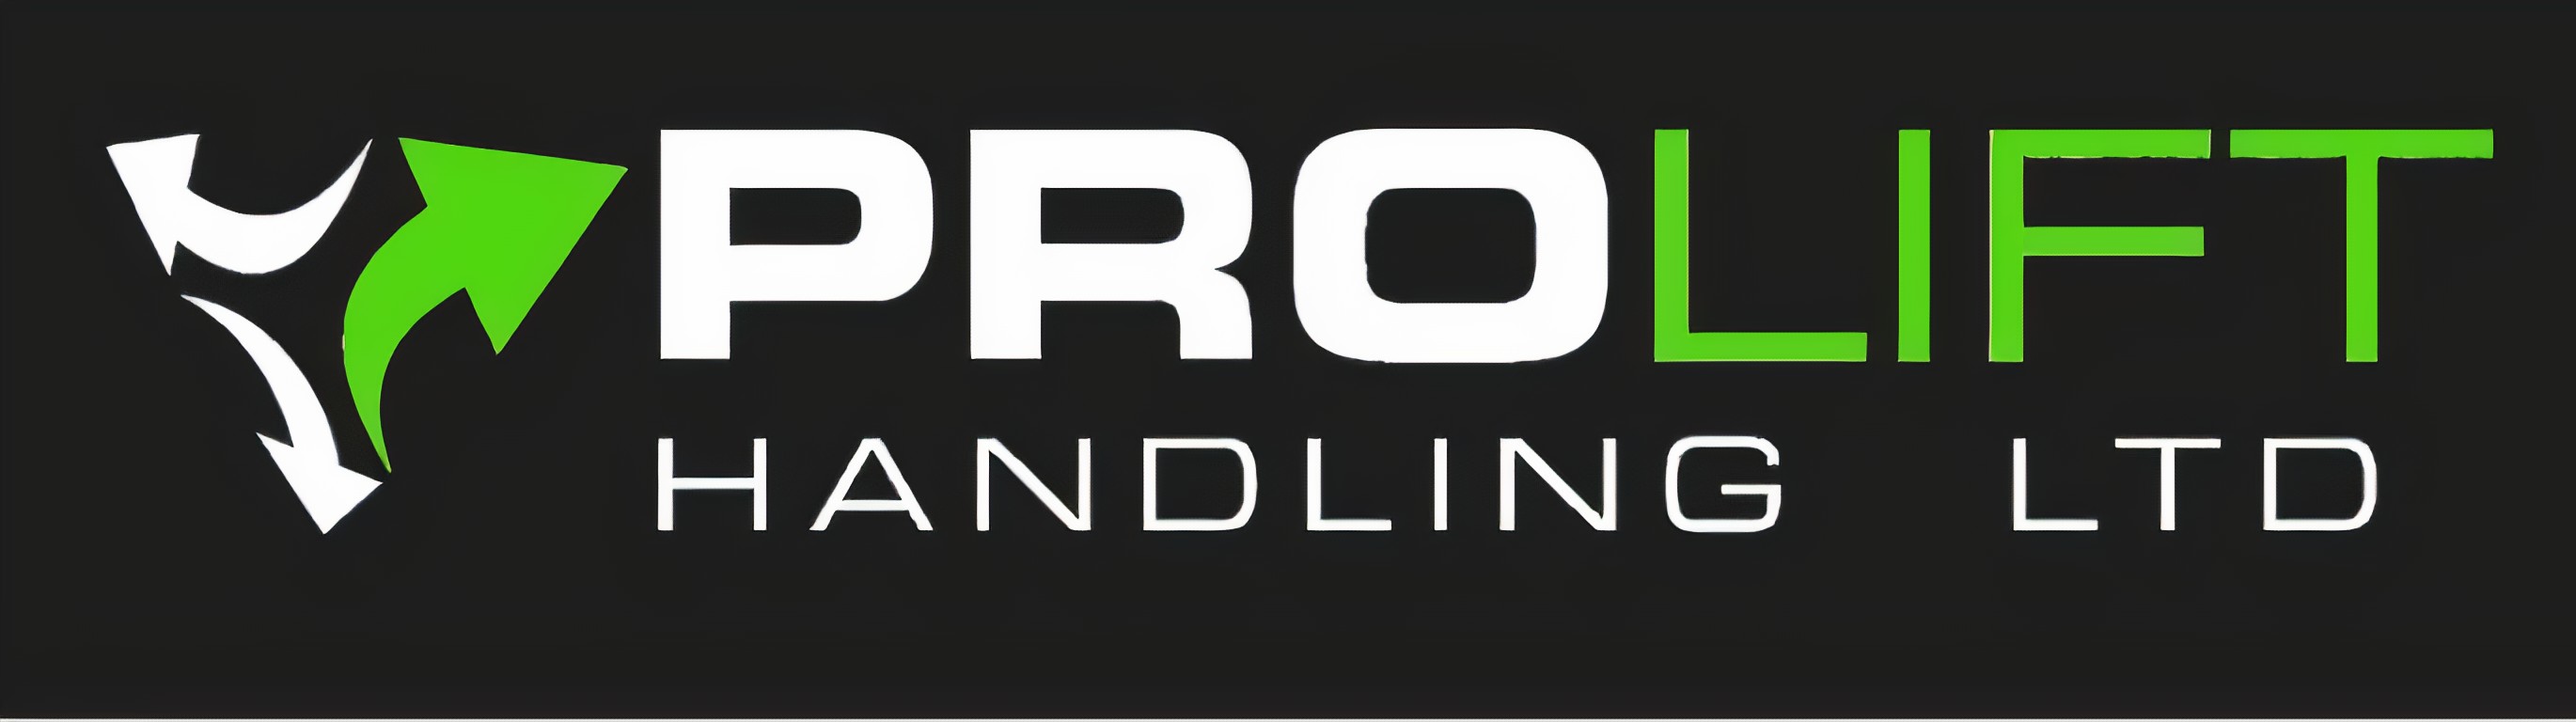 prolift_logo